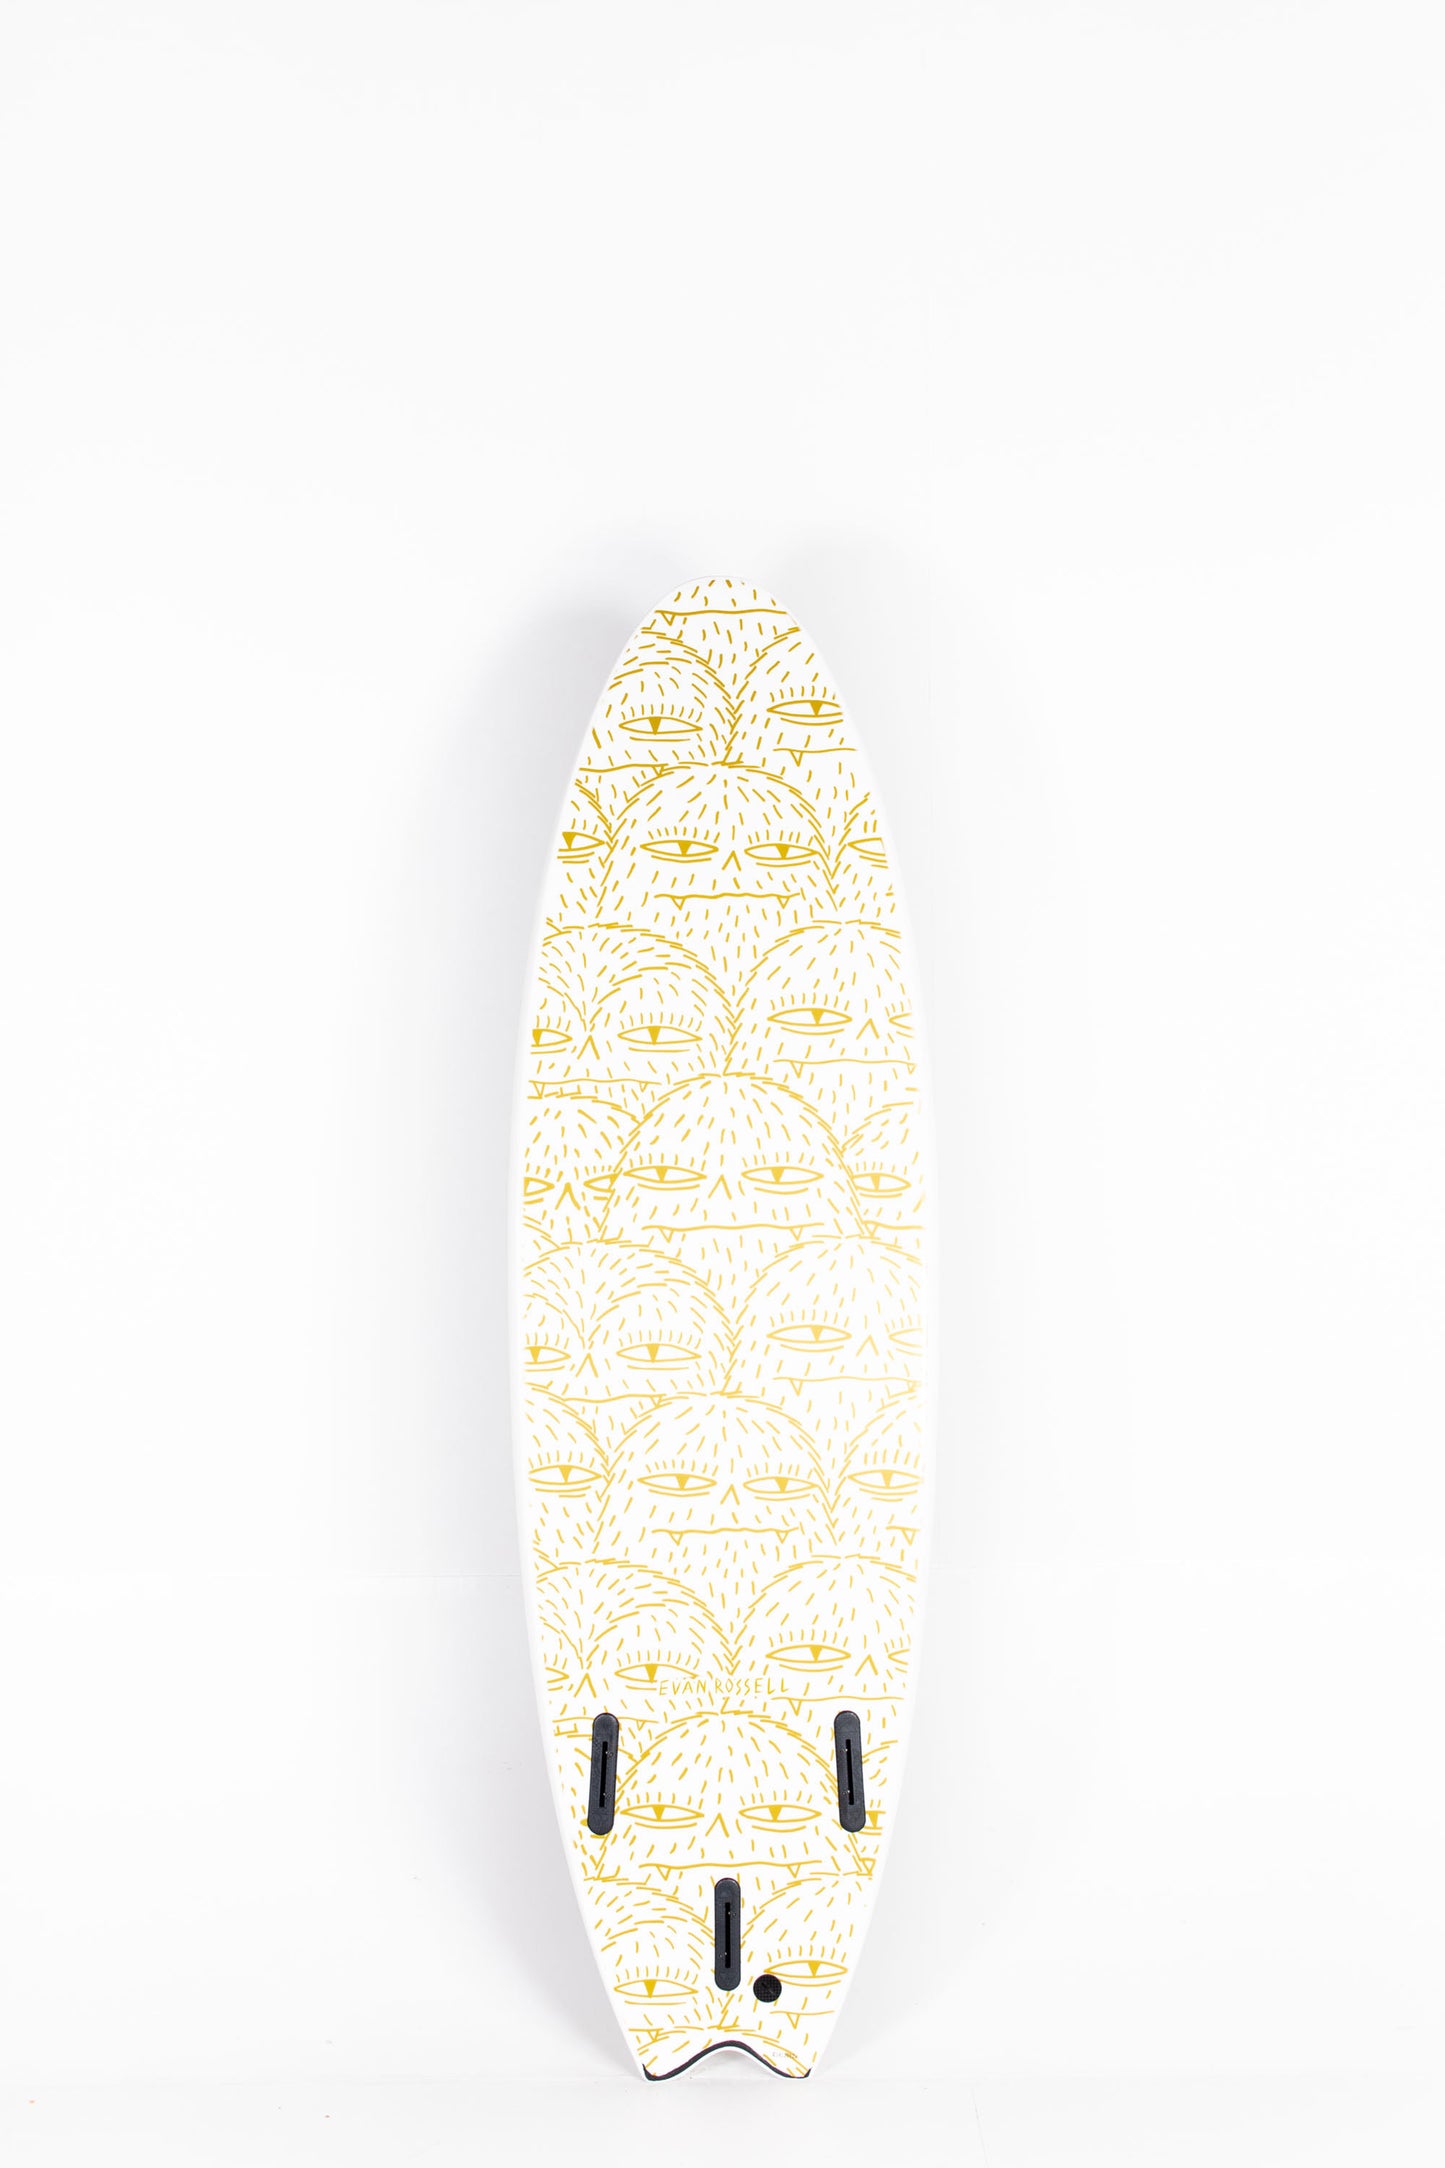 Pukas Surf Shop - Catch Surf - ODYSEA 66 SKIPPER THRUSTER x EVAN ROSSELL PRO - 6'6" x 22" x 3,125" x 55L.